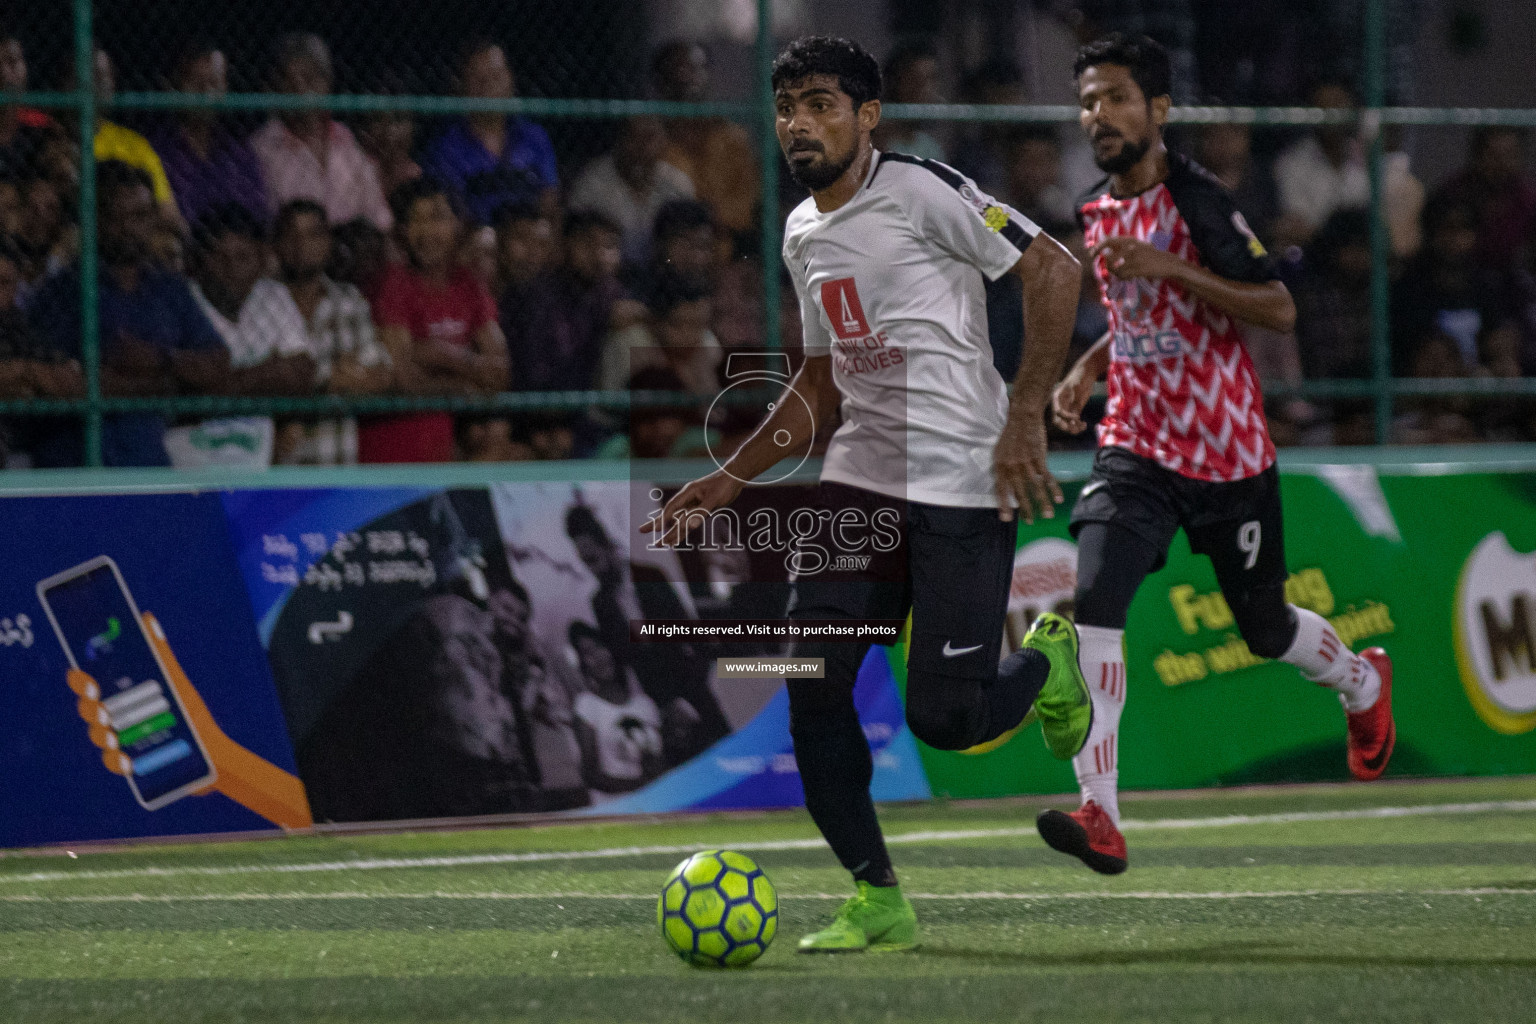 Club Maldives Day 14 in Hulhumale, Male', Maldives on 26th April 2019 Photos: Shuu Abdul Sattar /images.mv